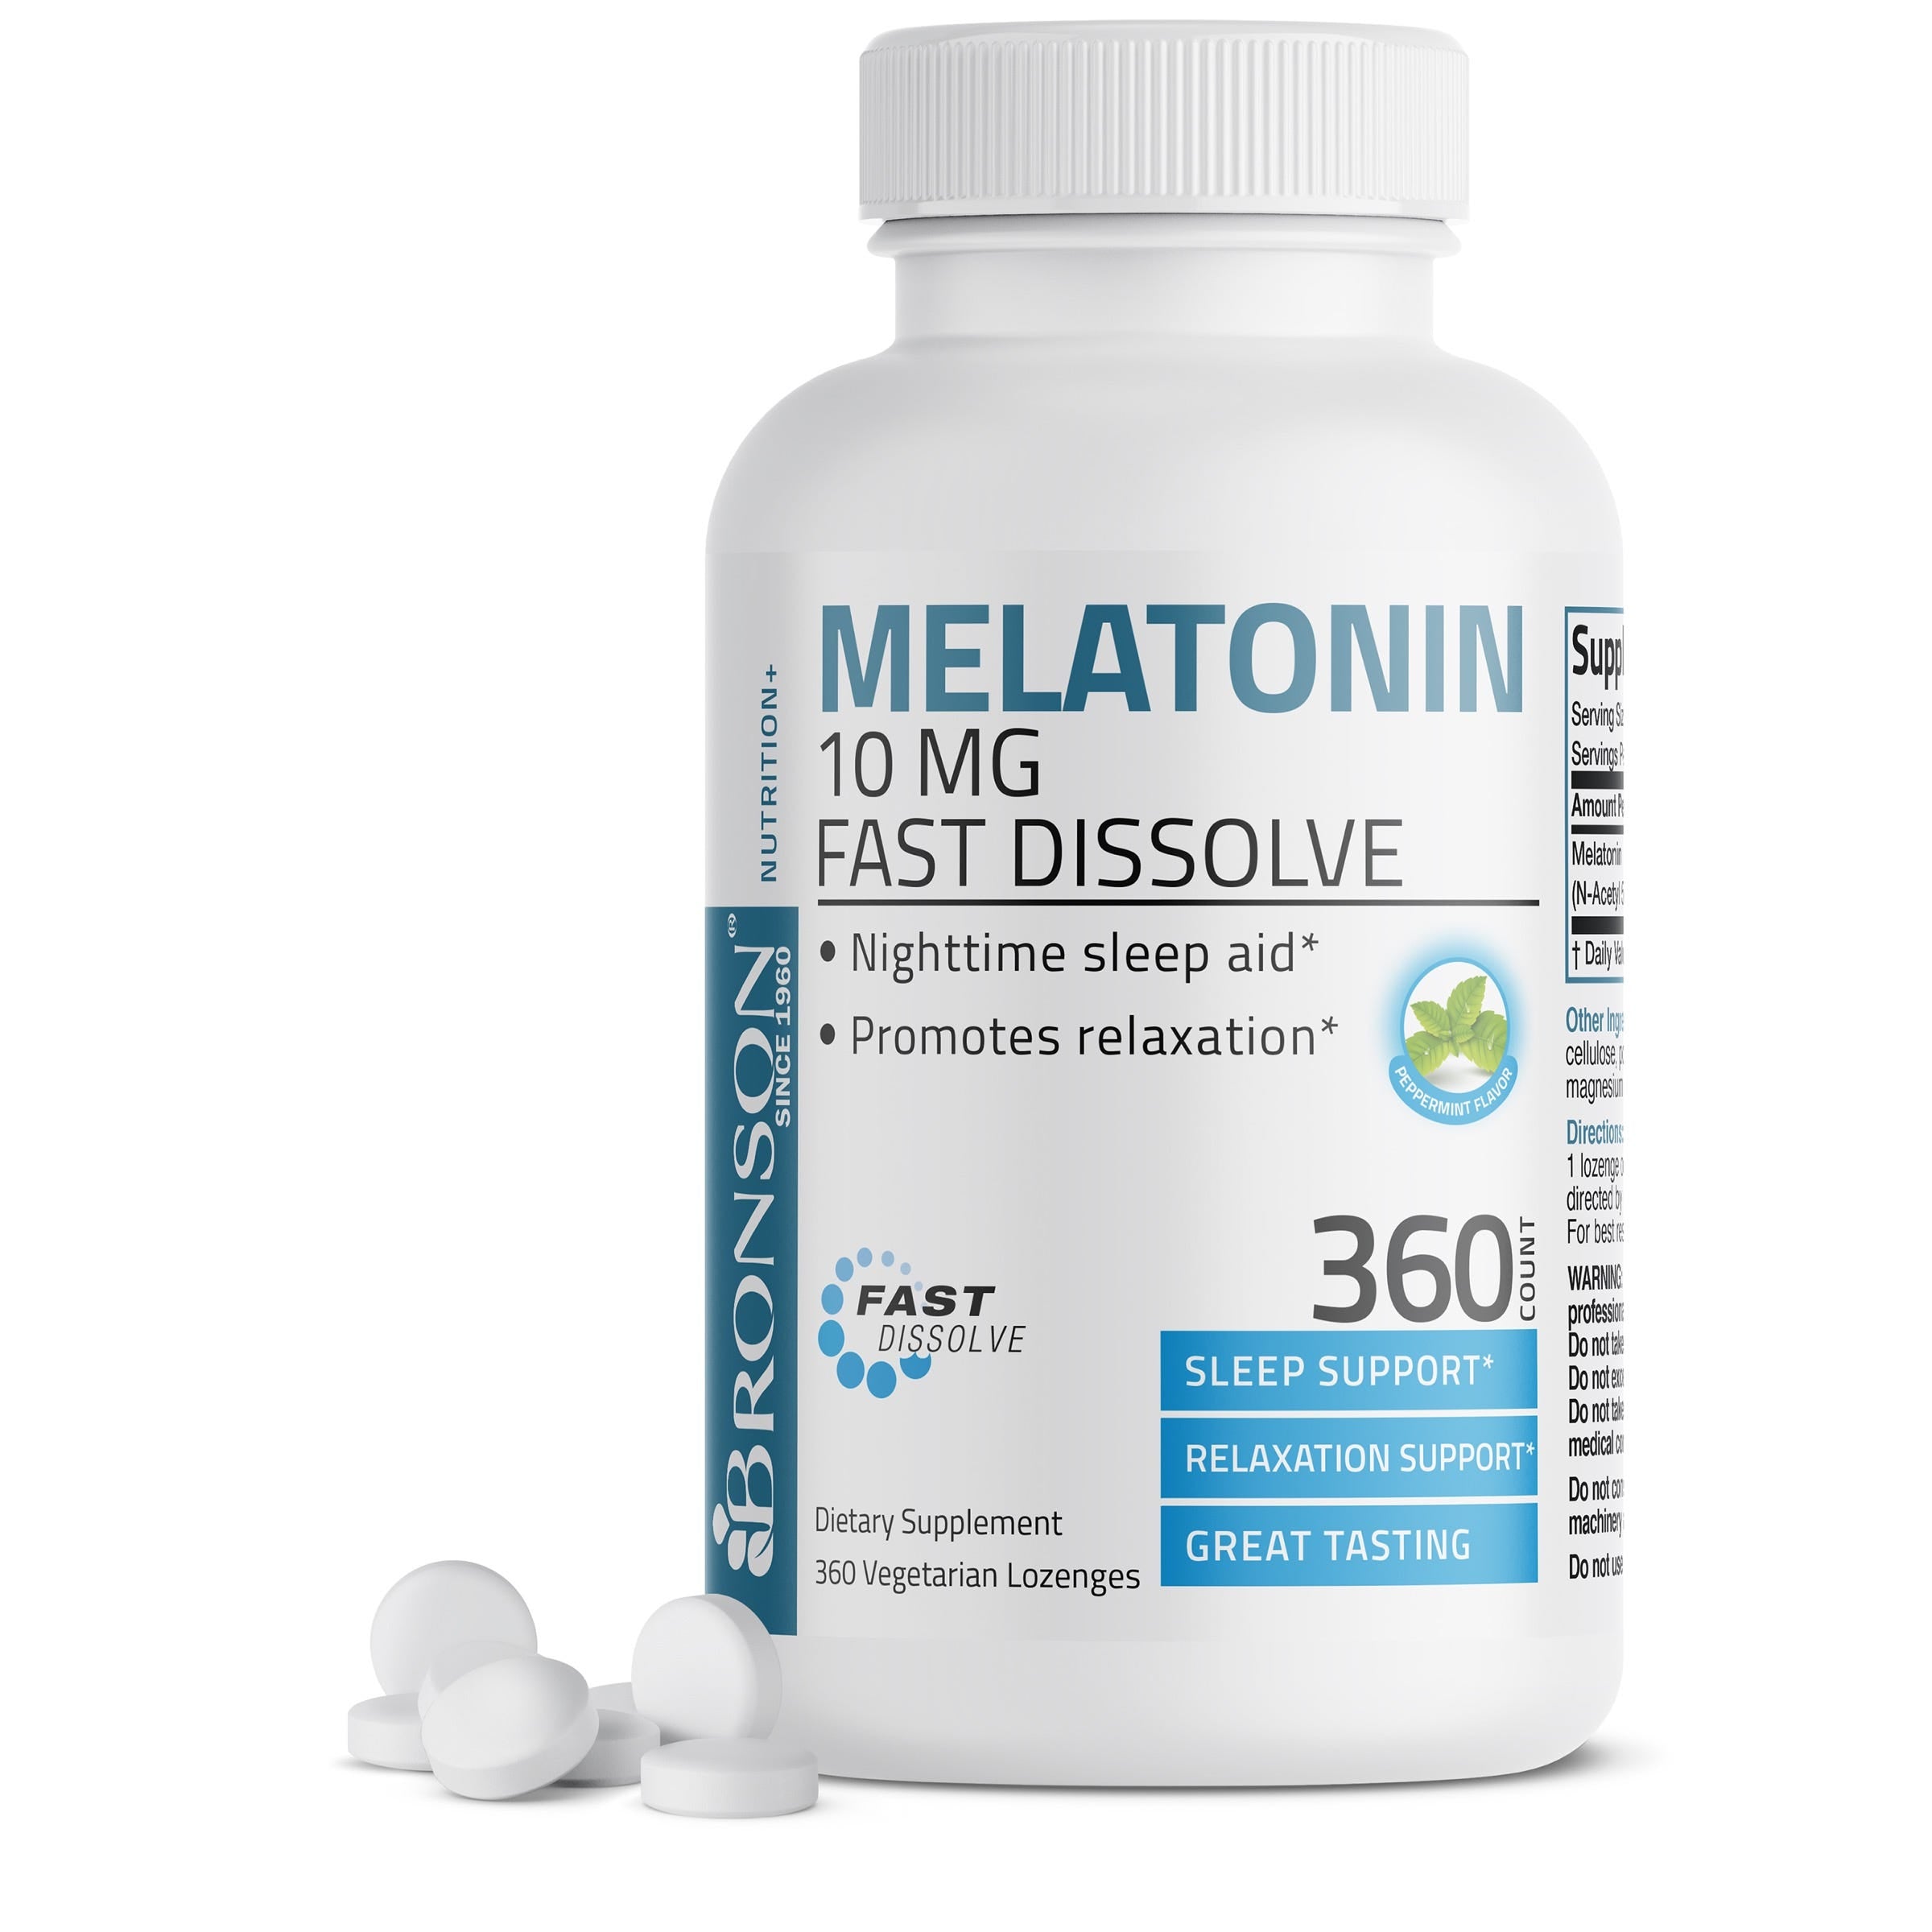 Melatonin Fast Dissolve - Peppermint - 10 mg - 360 Vegetarian Lozenges view 1 of 6